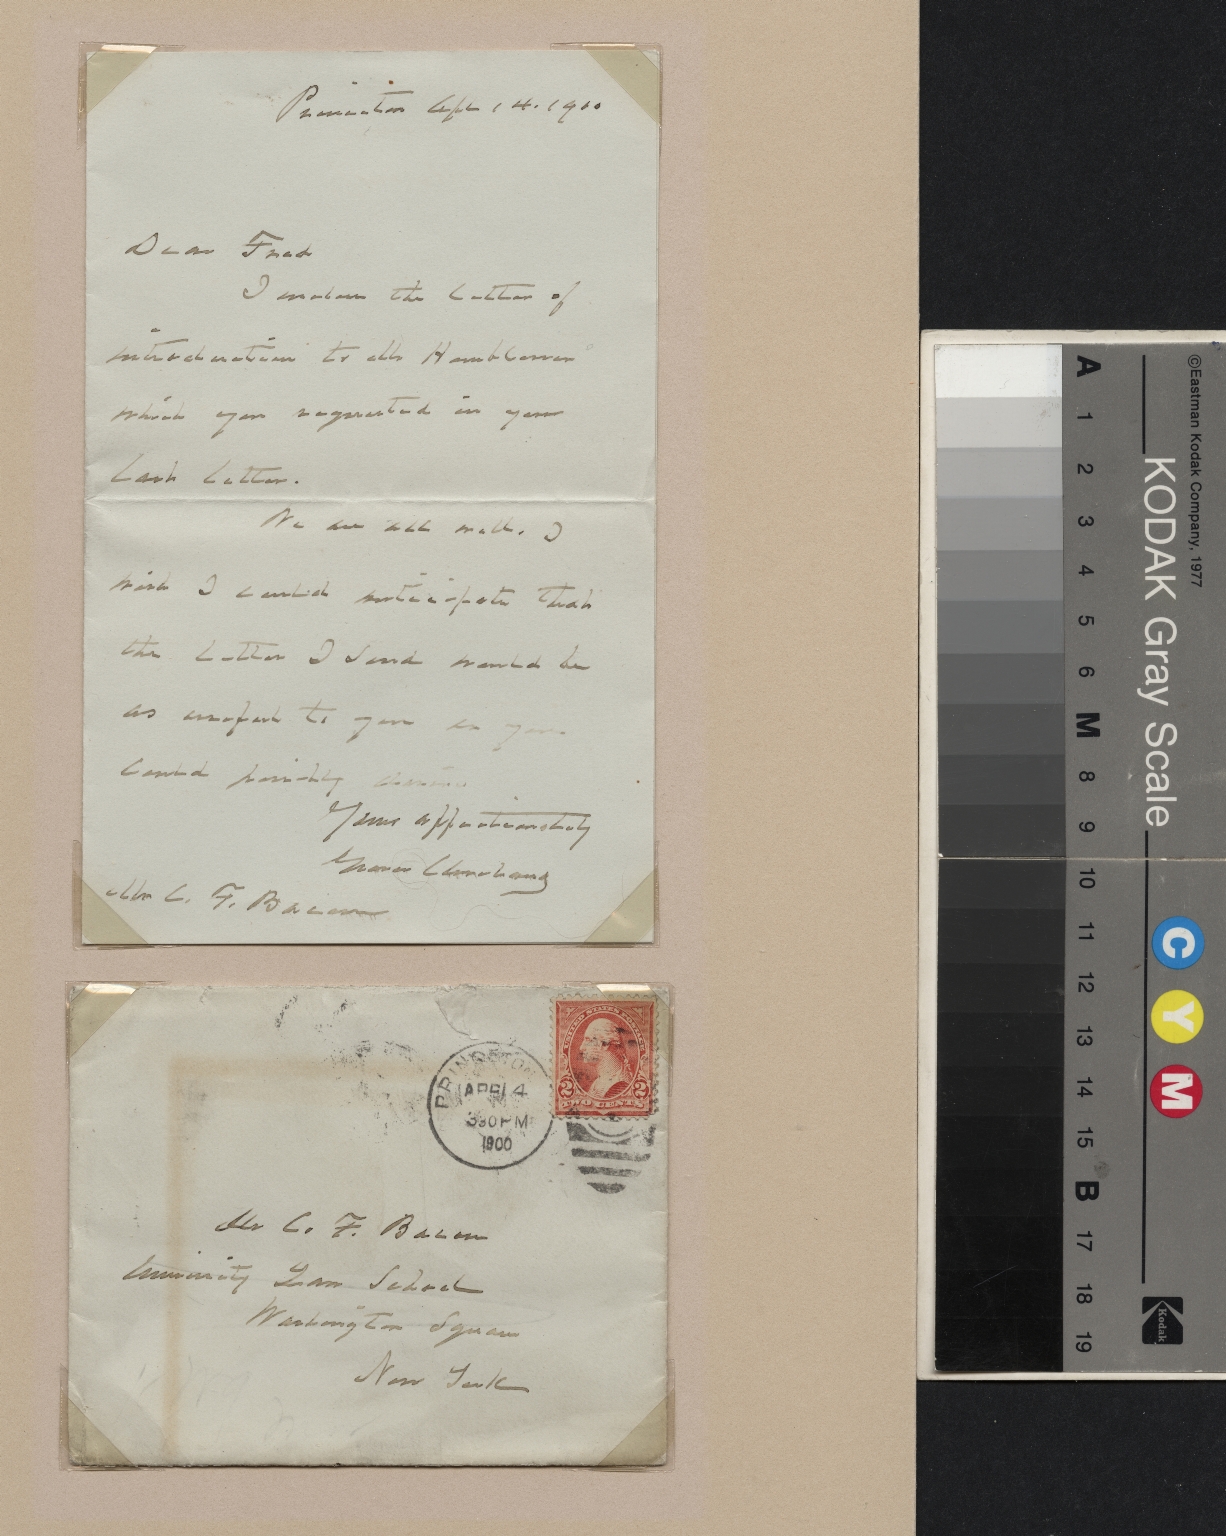 Grover Cleveland letter